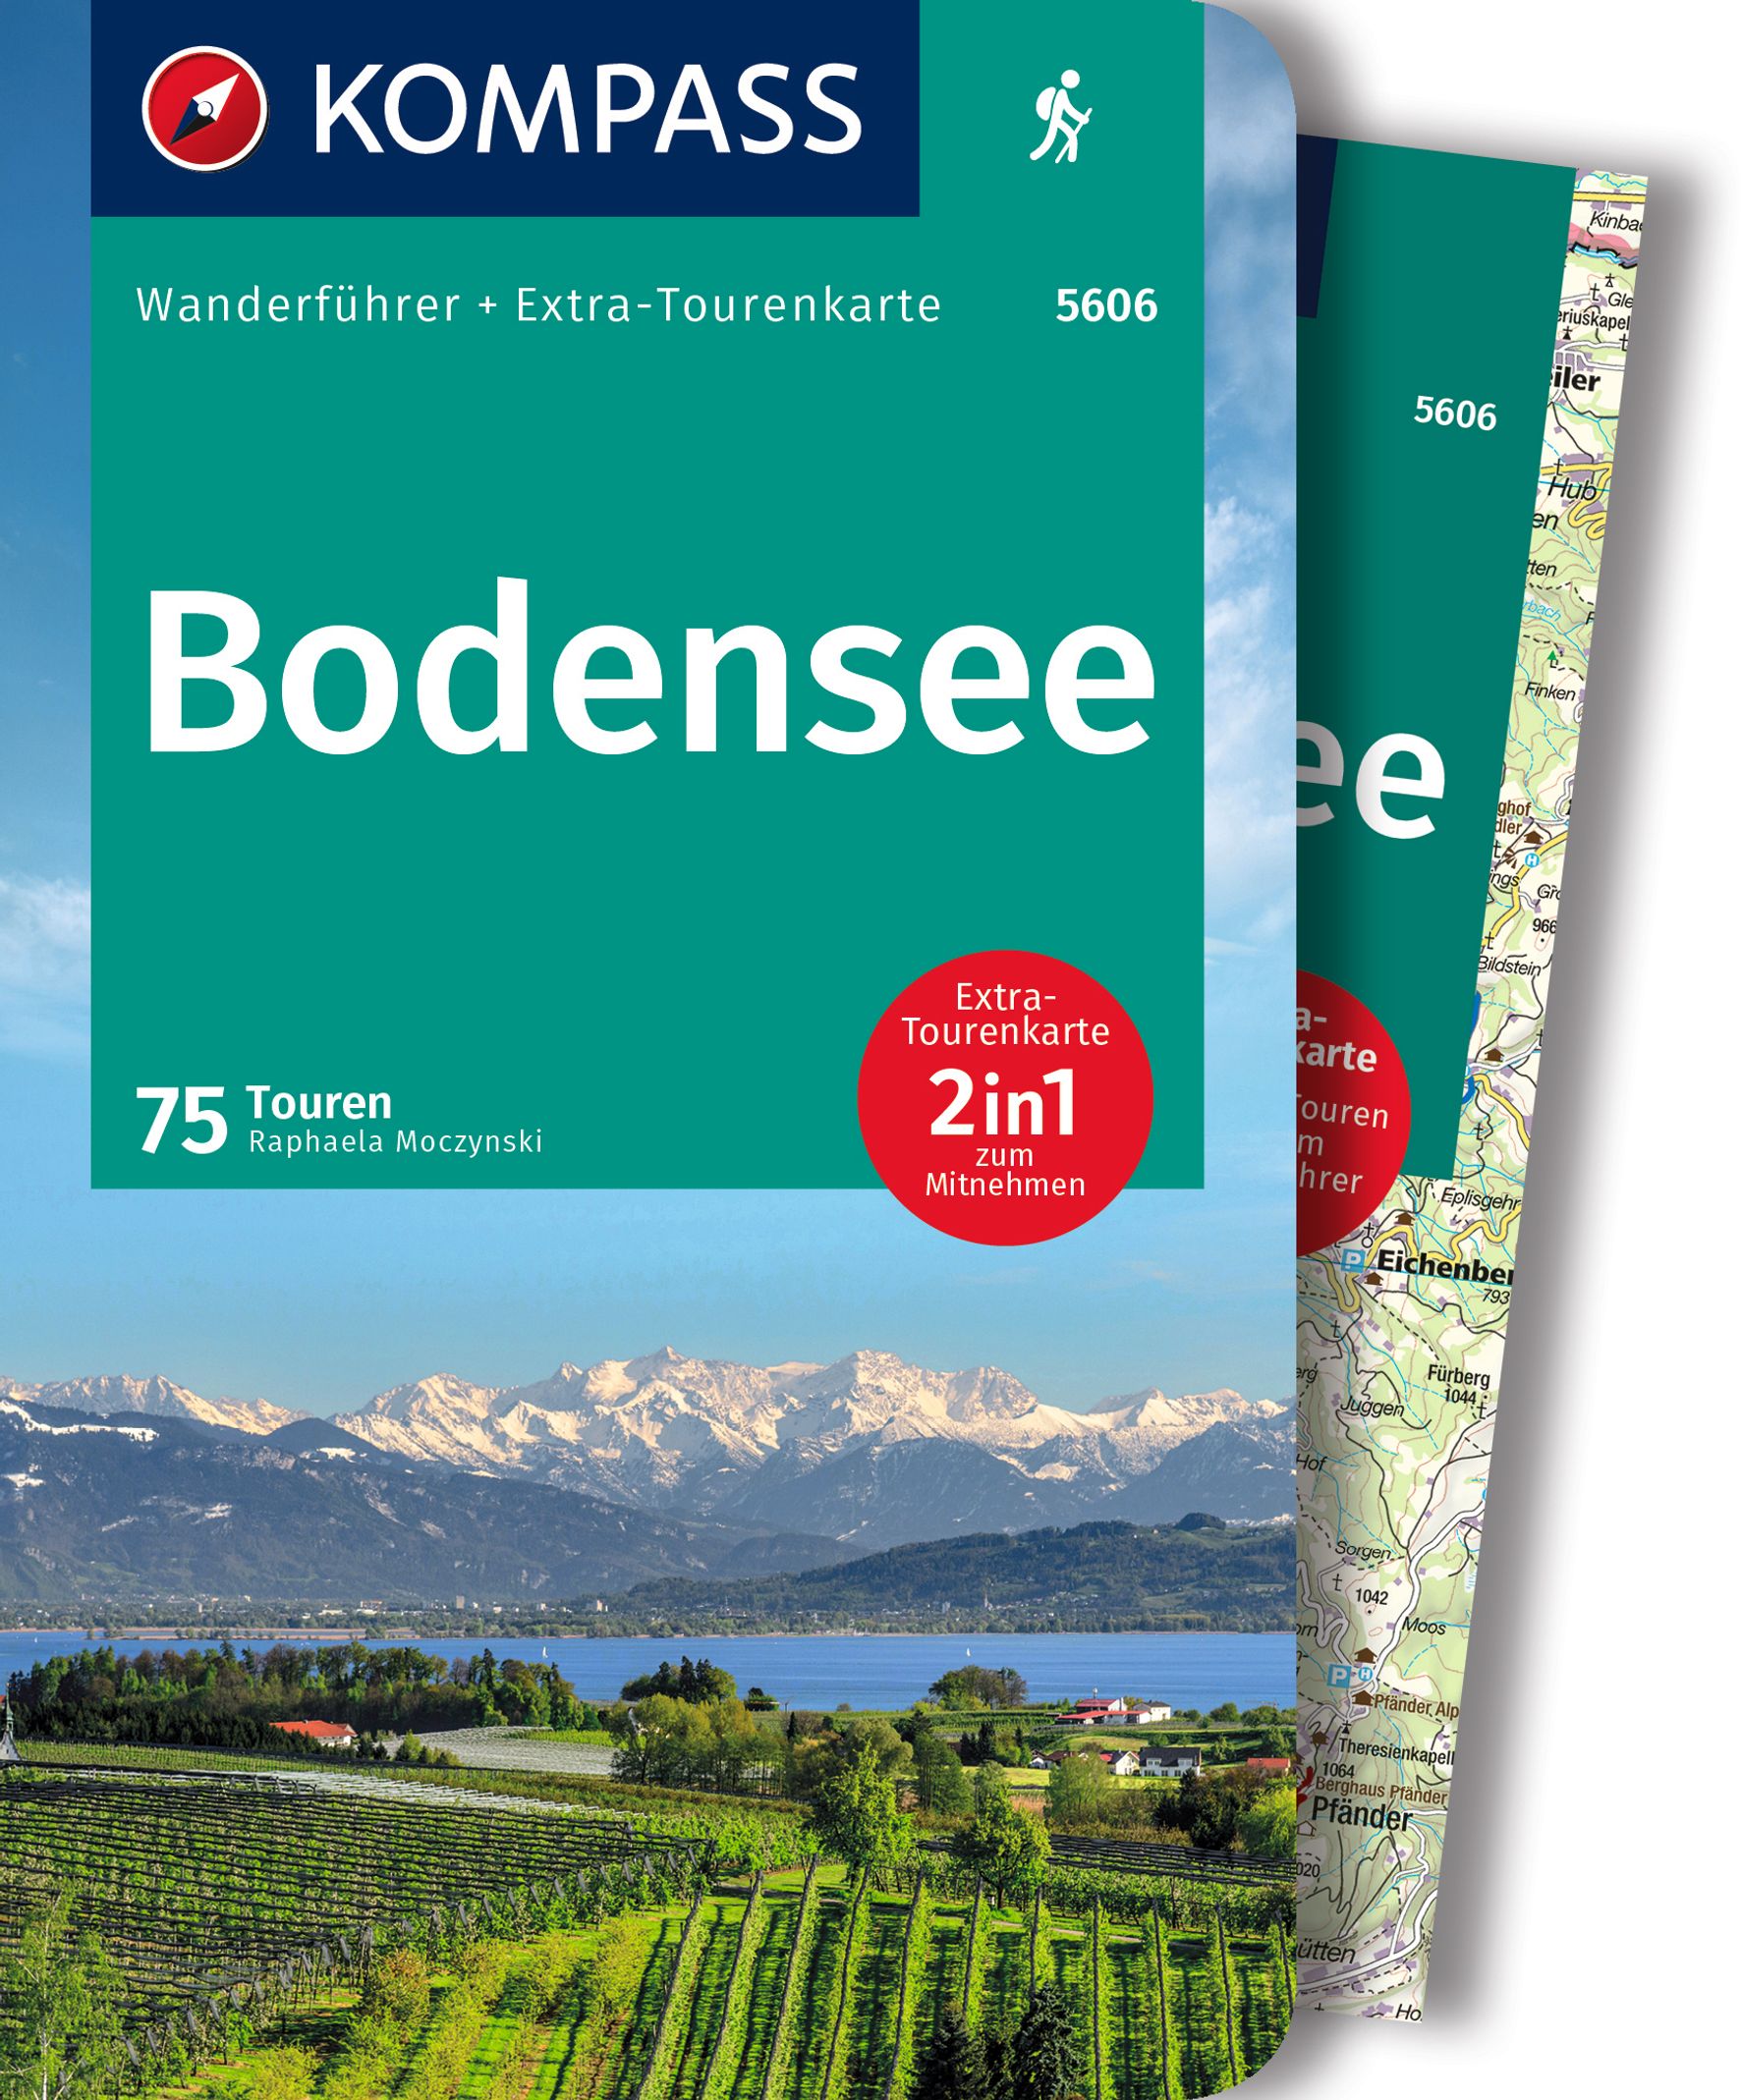 MAIRDUMONT Bodensee, 75 Touren mit Extra-Tourenkarte